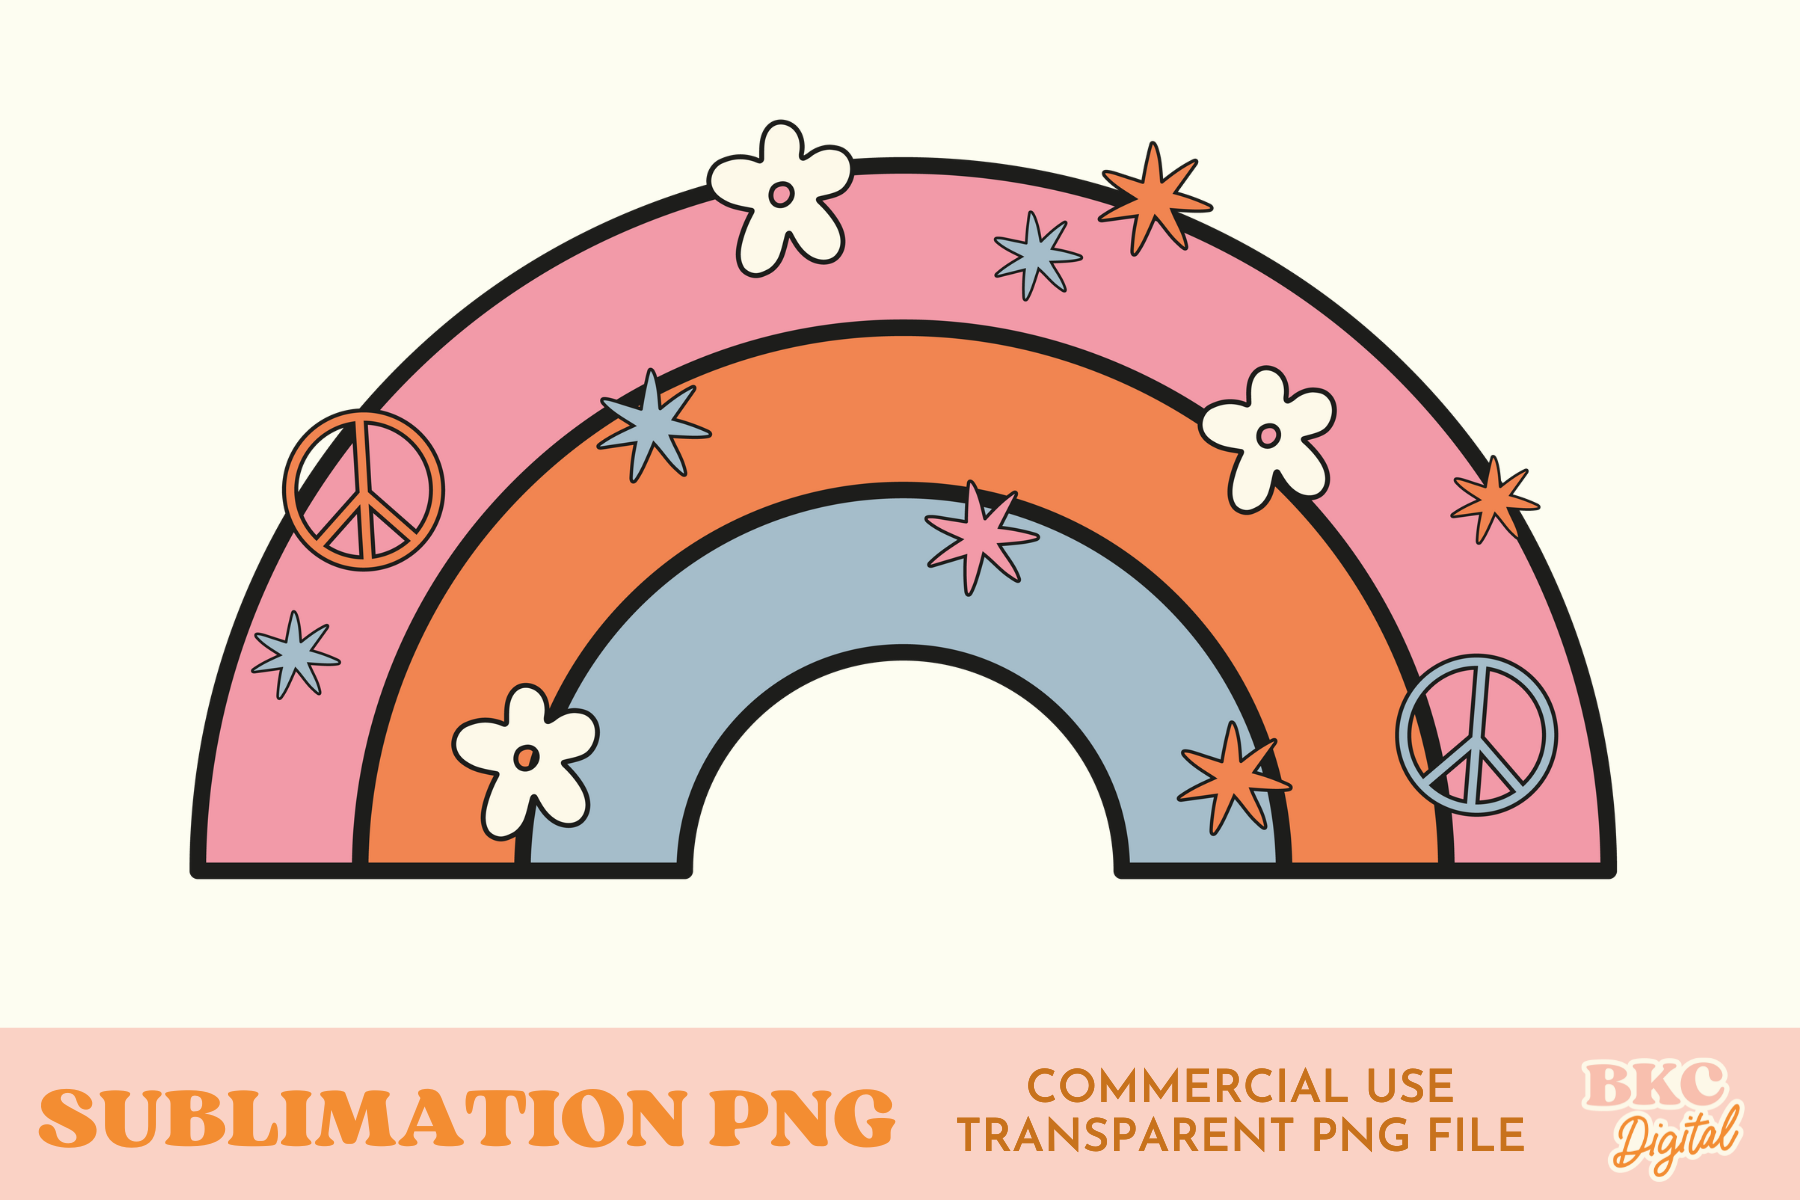 Passenger Princess Trendy SVG & PNG Graphic by bykirstcodigital